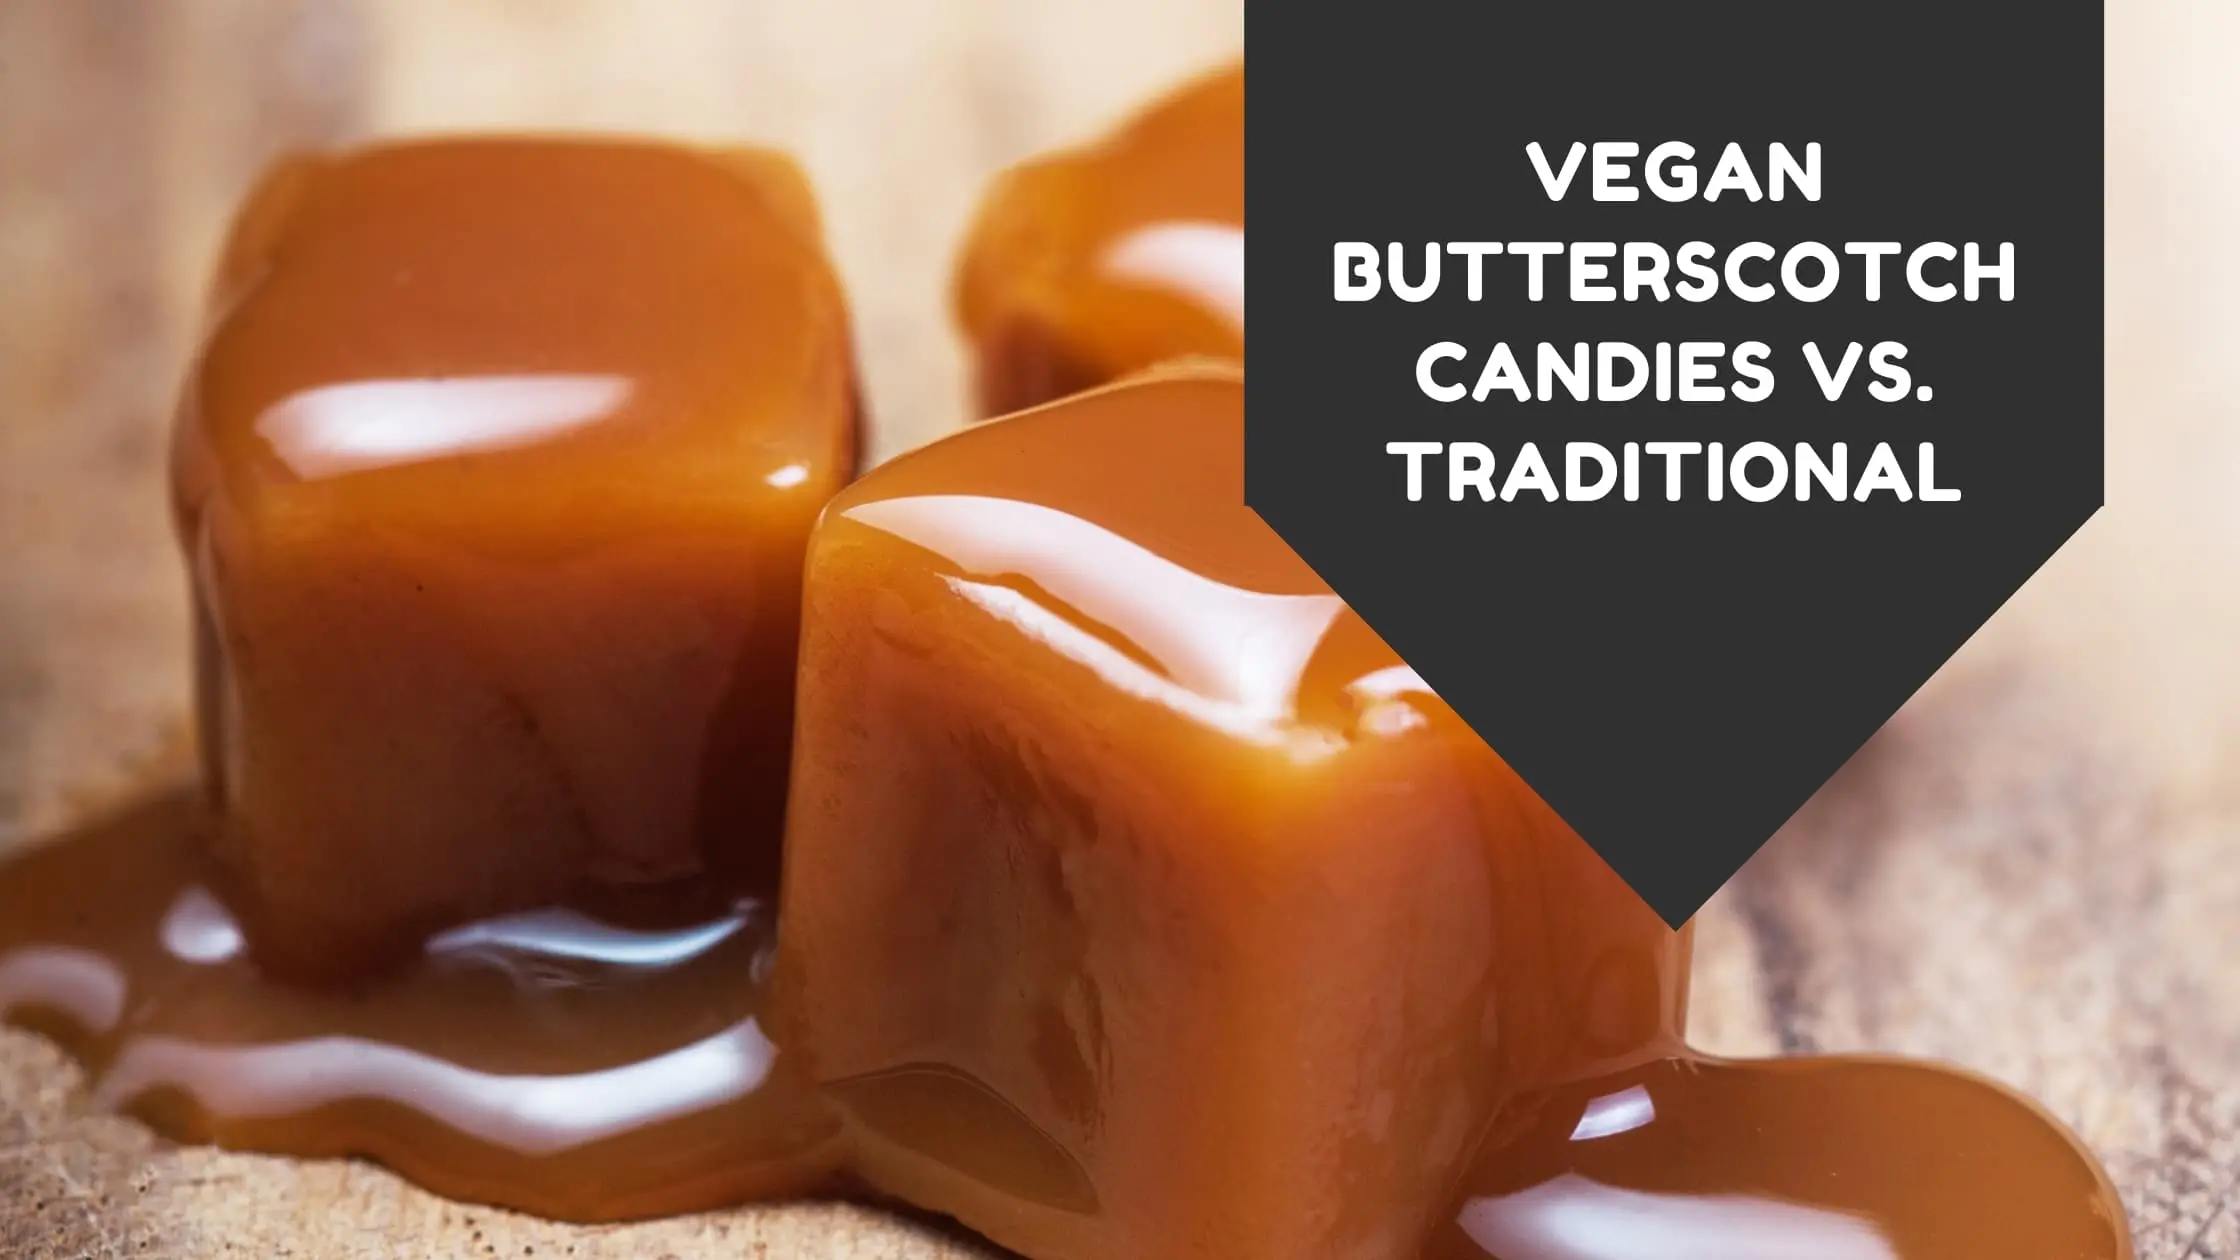 Vegan Butterscotch Candies vs. Traditional